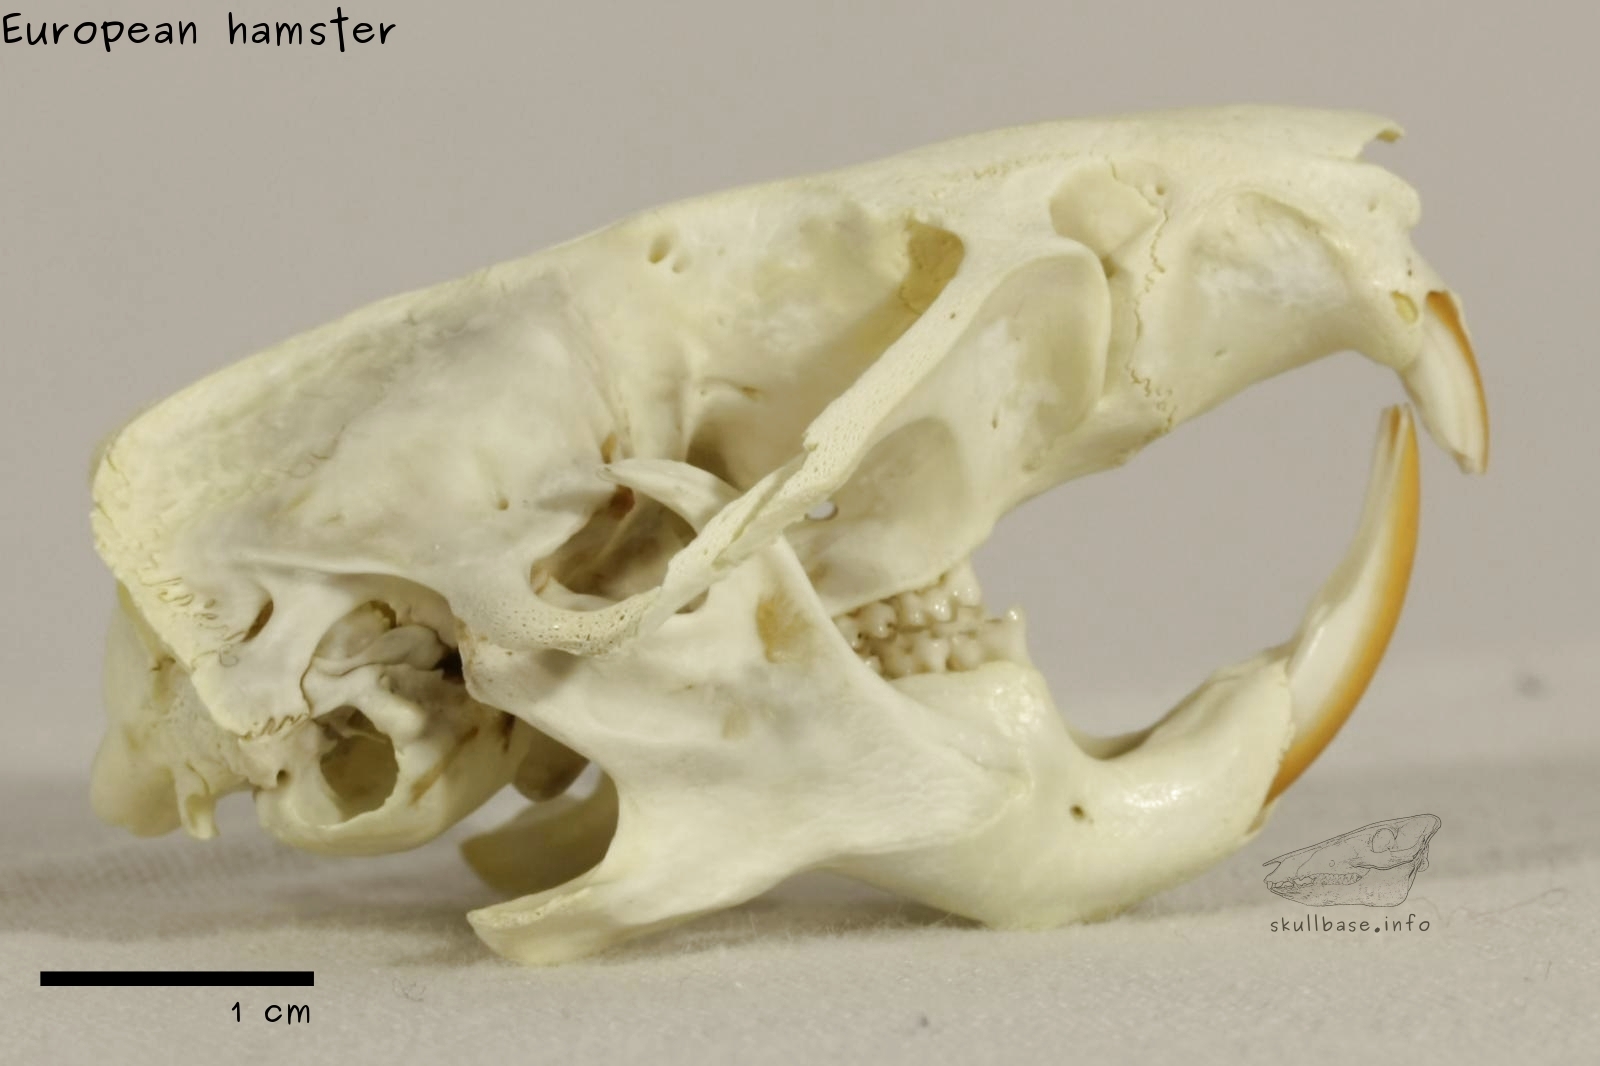 European hamster (Cricetus cricetus) skull lateral view